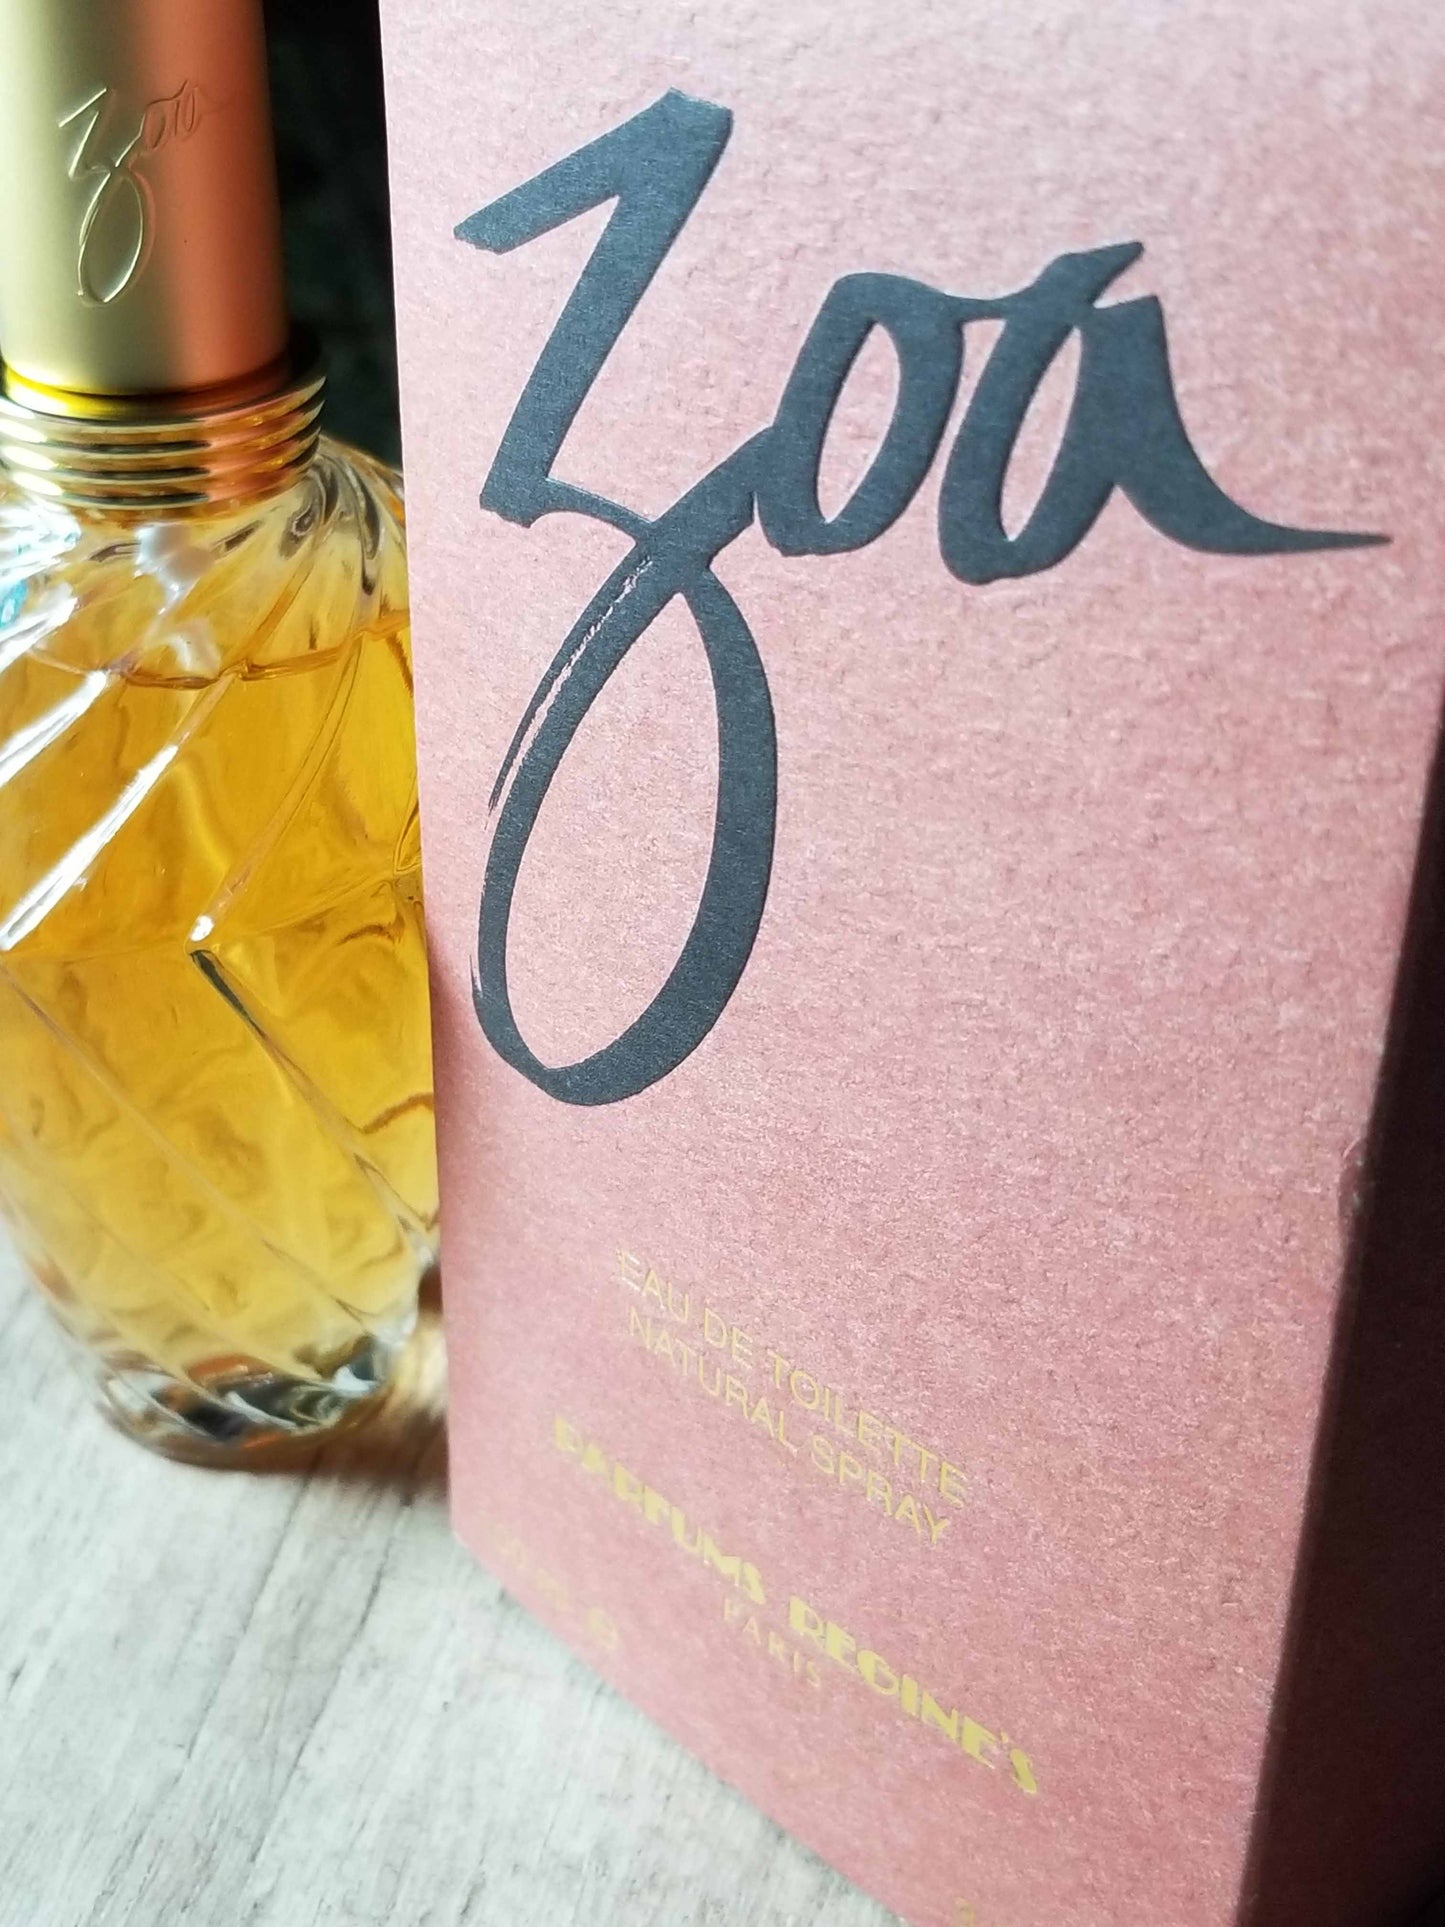 Zoa Parfums Regine for women EDT Spray 100 ml 3.4 oz, Vintage, Rare